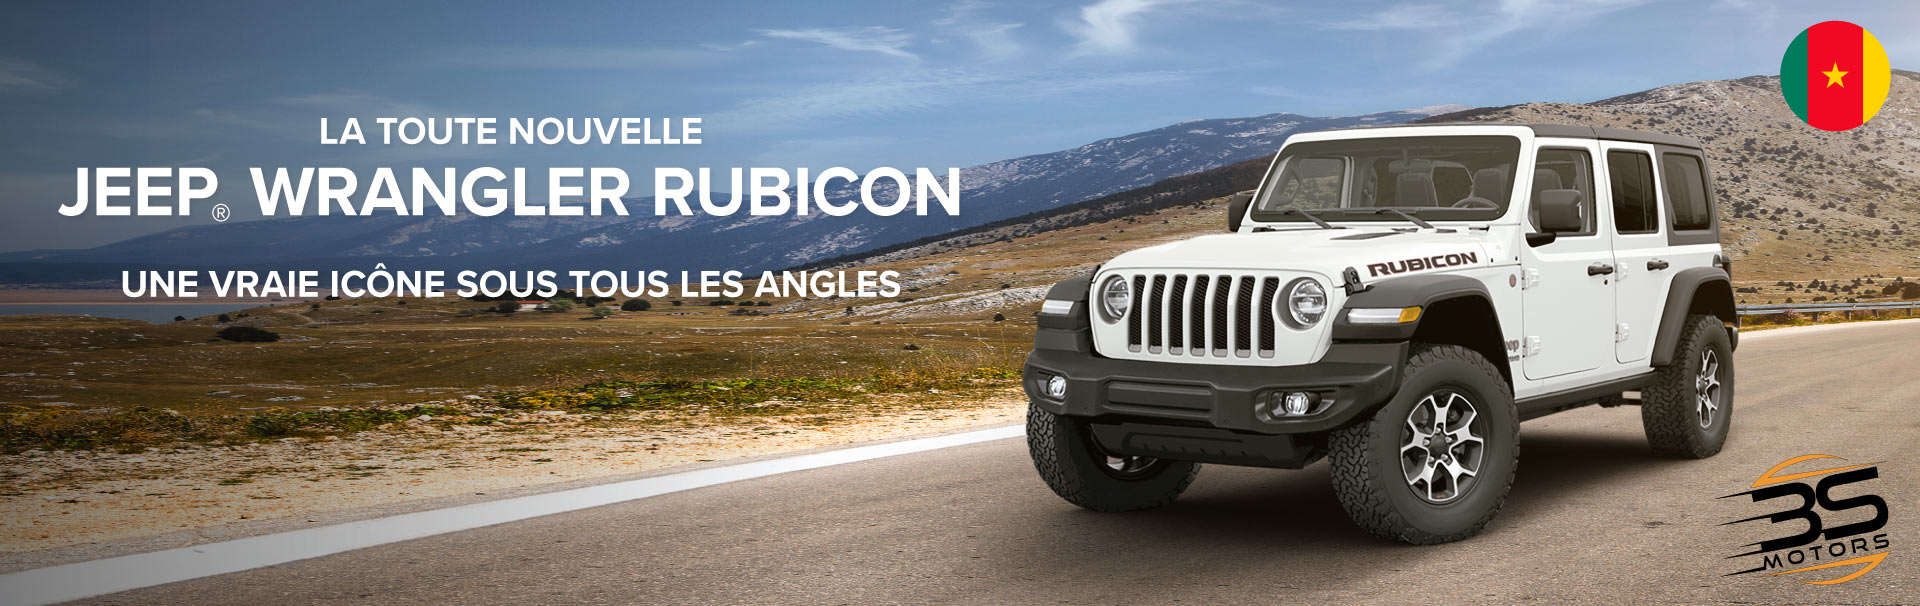 Jeep Cameroun | La toute nouvelle Jeep Wrangler Rubicon